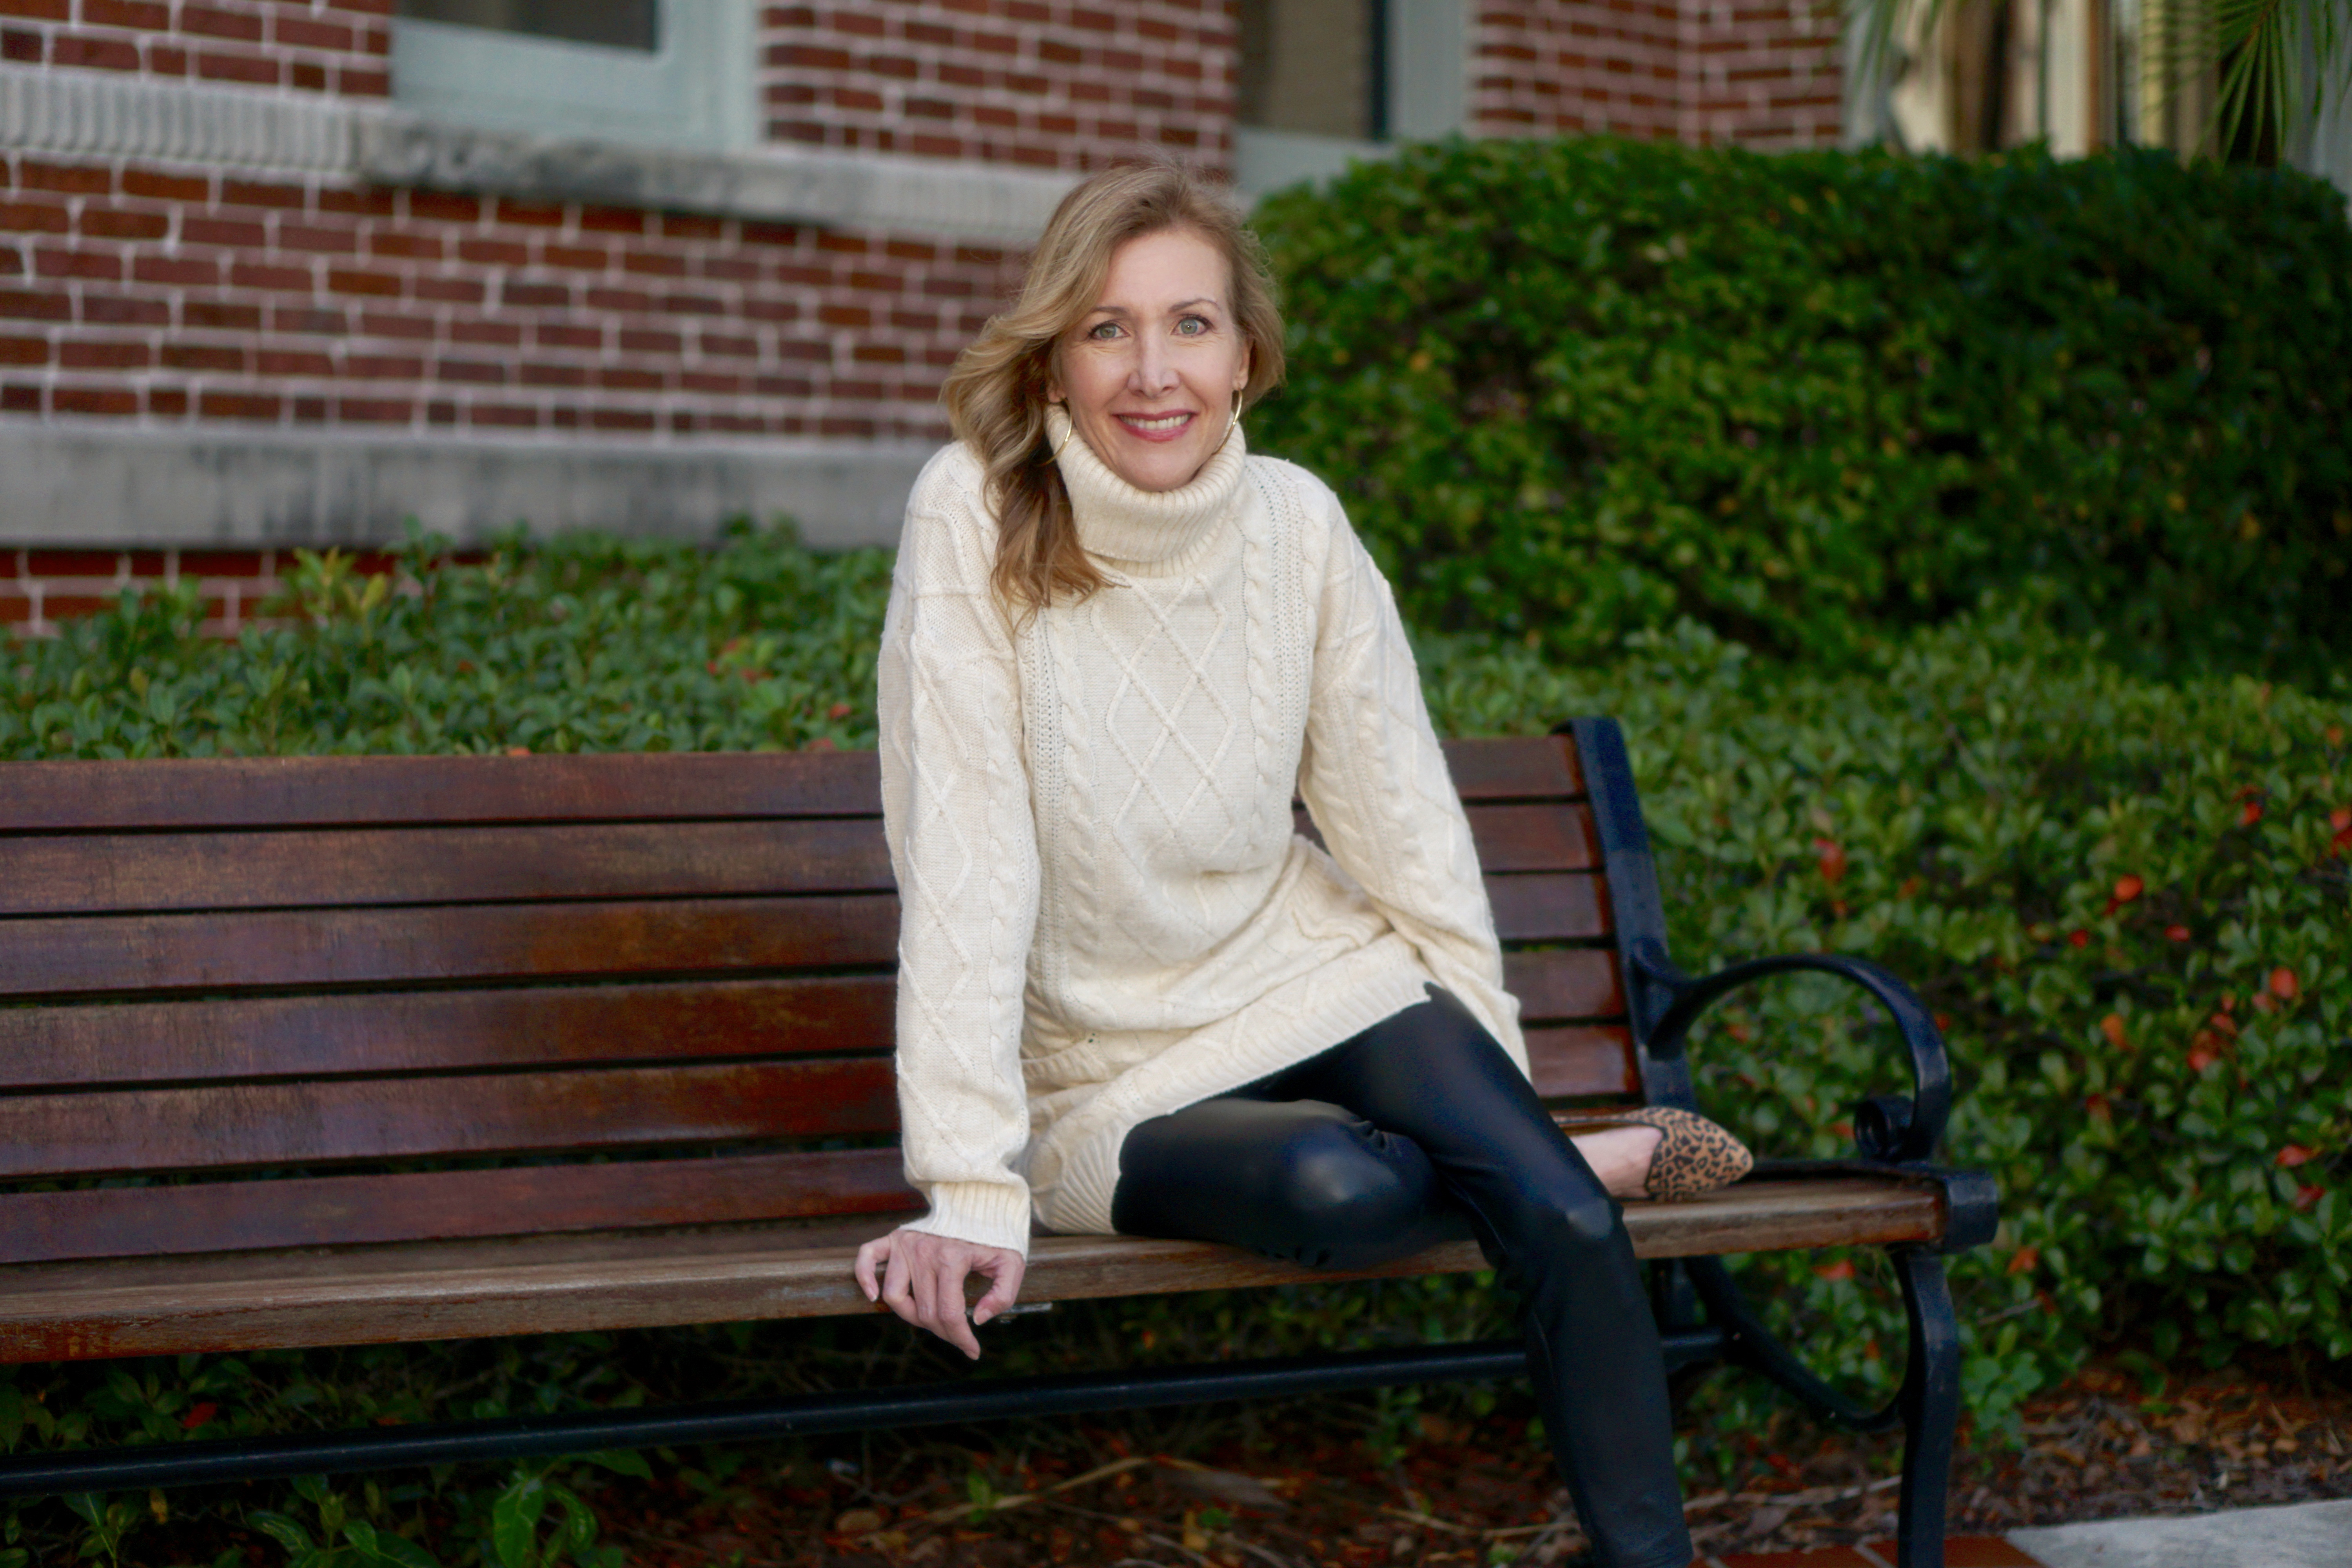 Woman wearing cream sweater sitting on bench